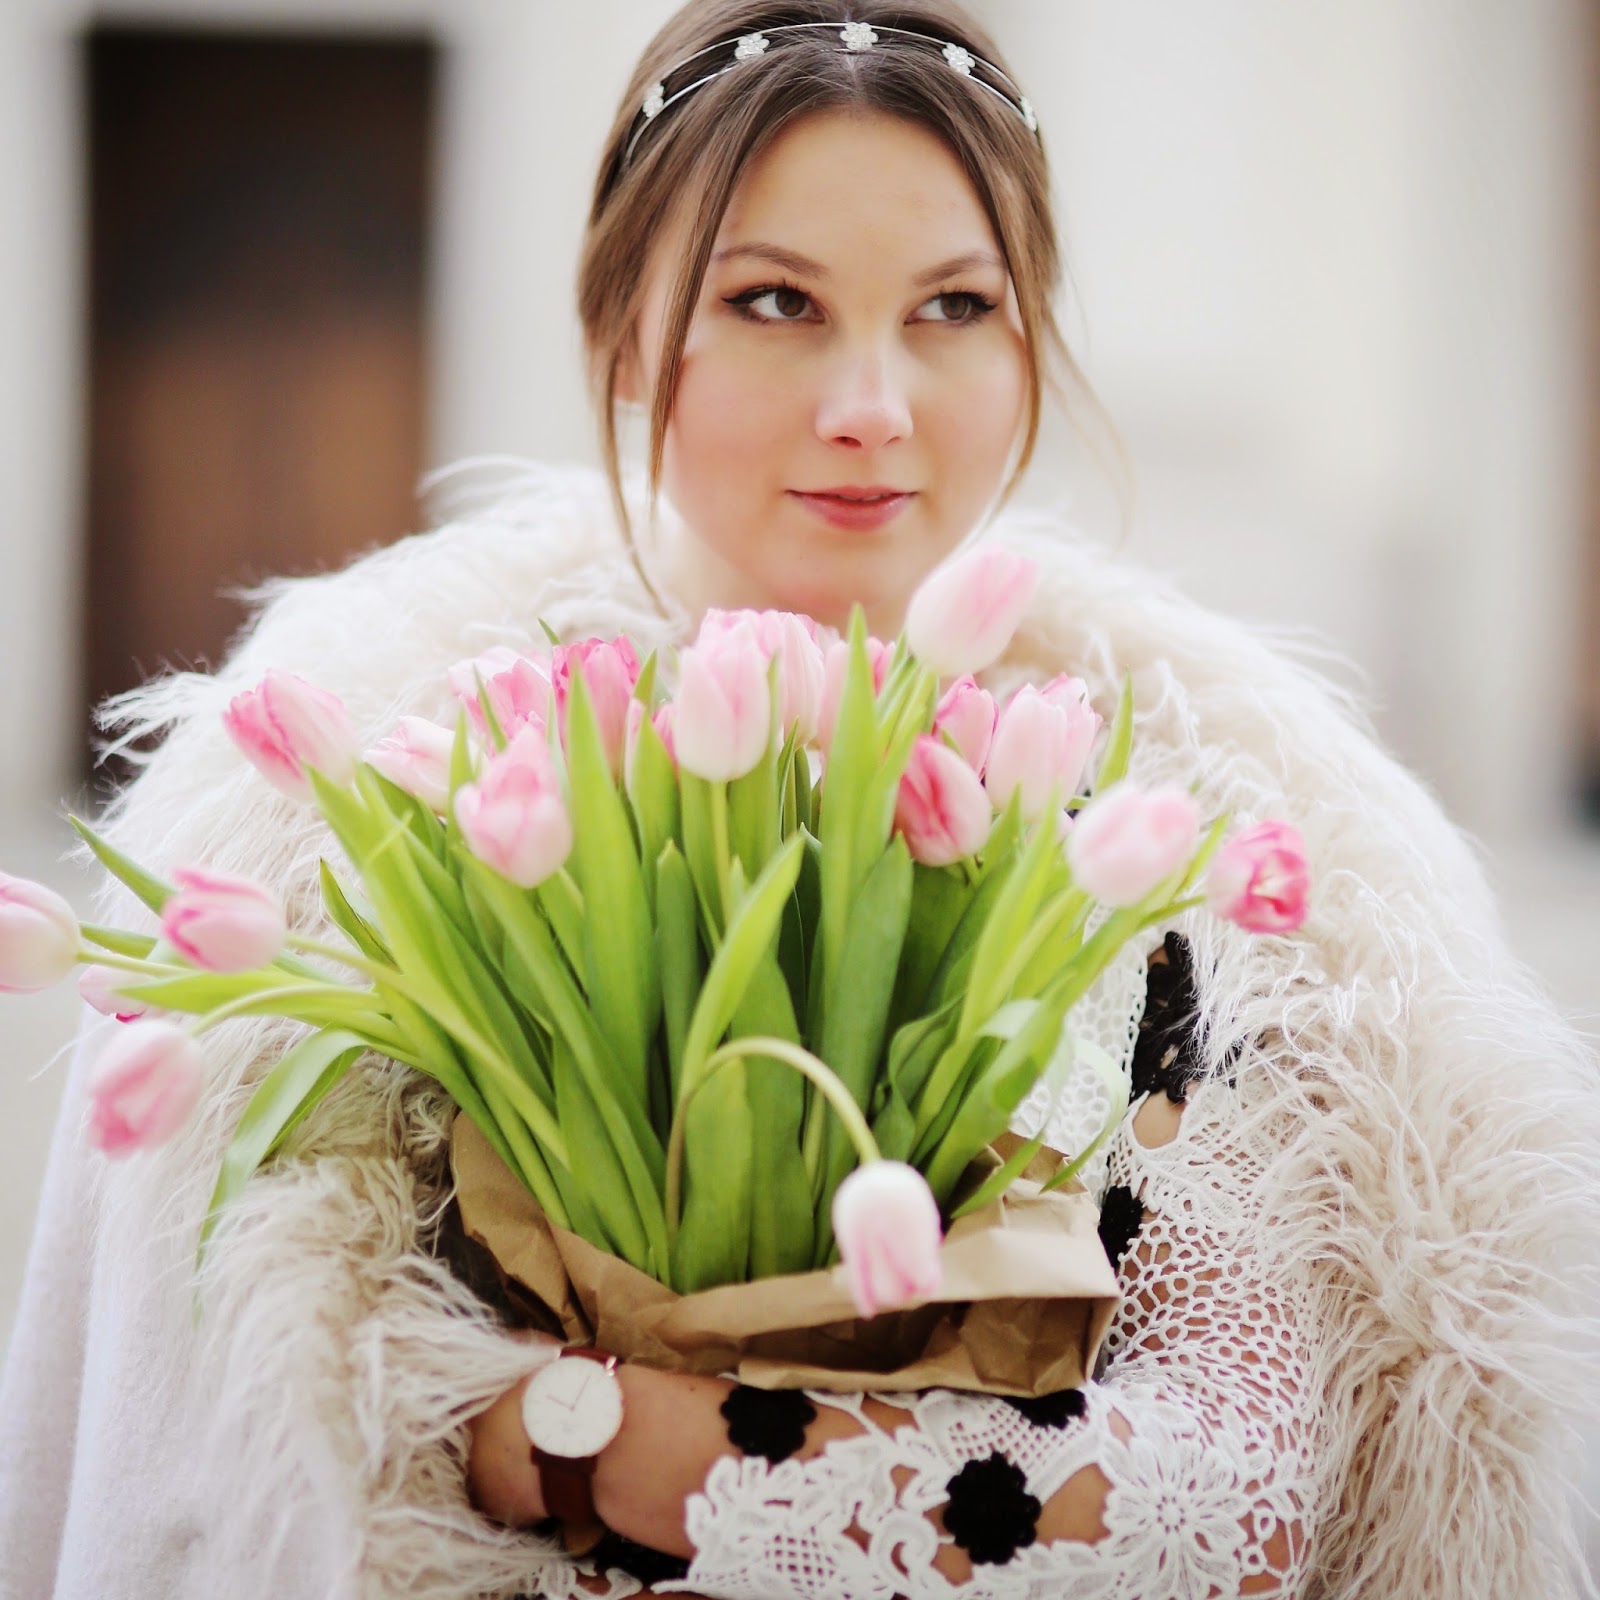 angelica ardasheva / daniel wellington watch / pink tulips